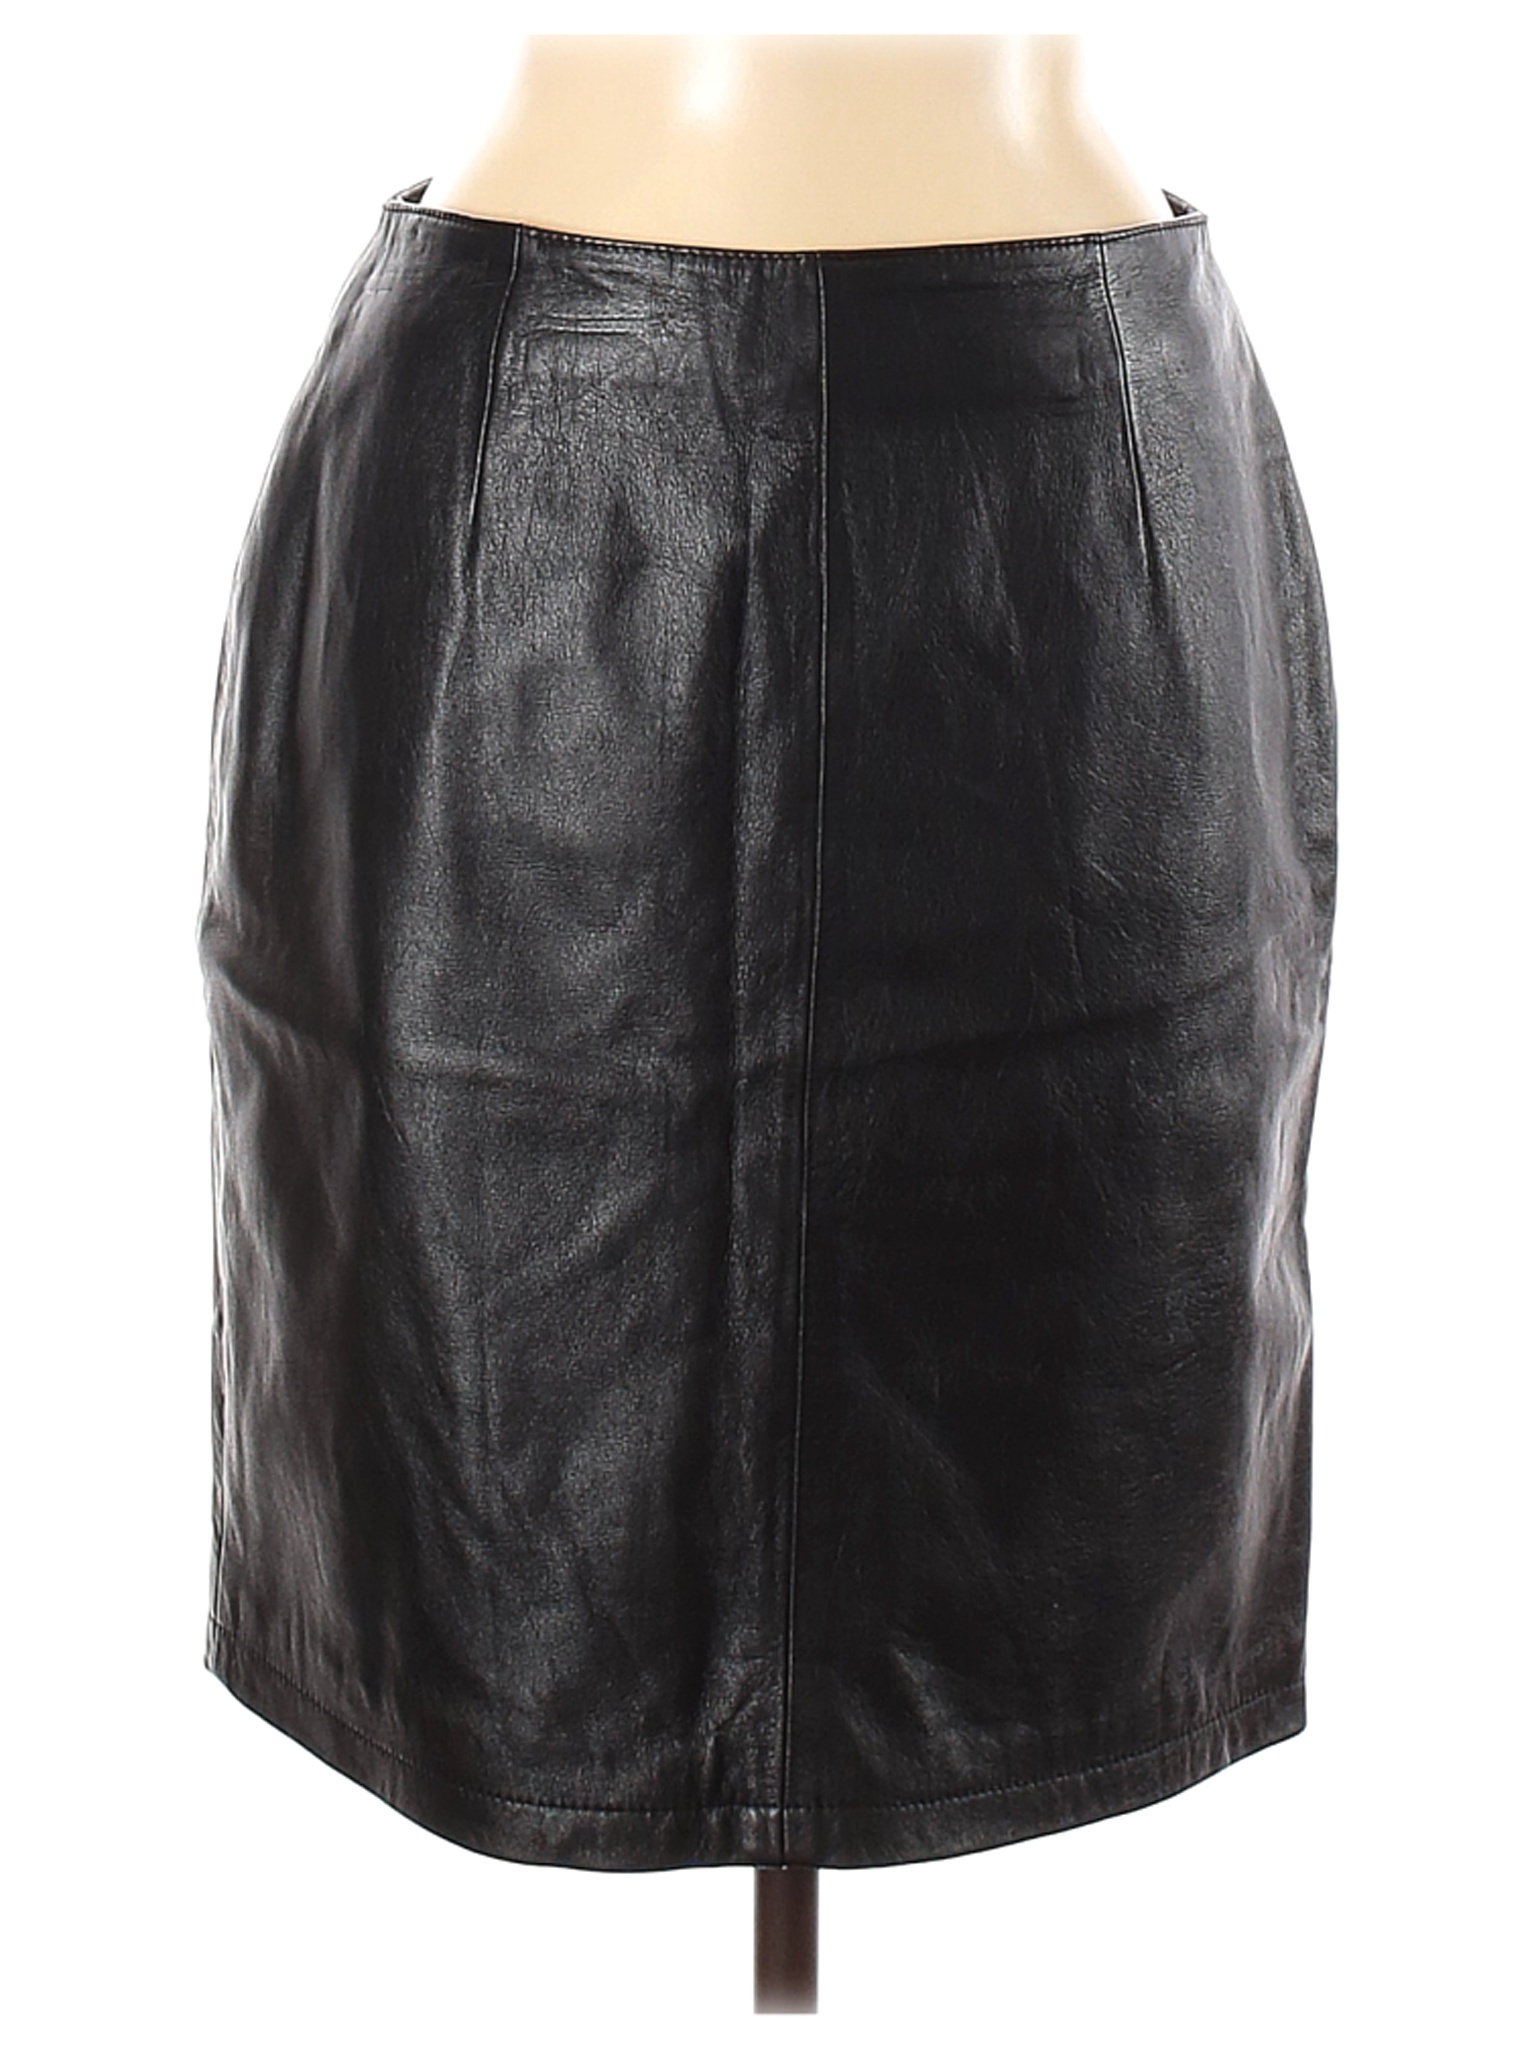 Wilsons Leather Maxima Women Black Leather Skirt 8 | eBay